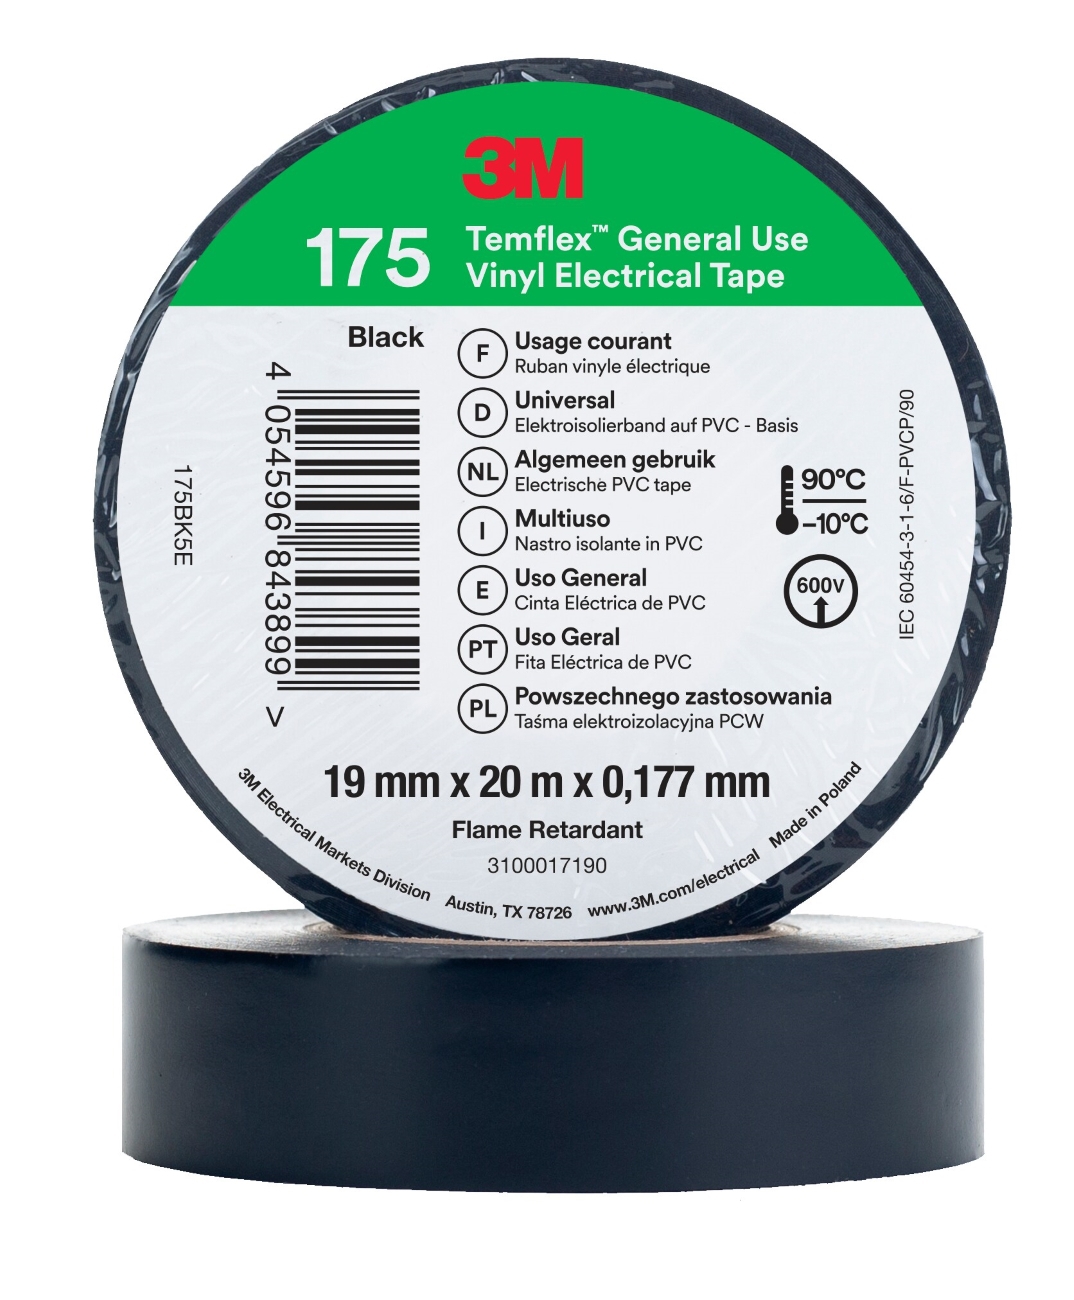 3M Temflex 175 vinyl electrical insulation tape, black, 19 mm x 20 m, 0.18 mm